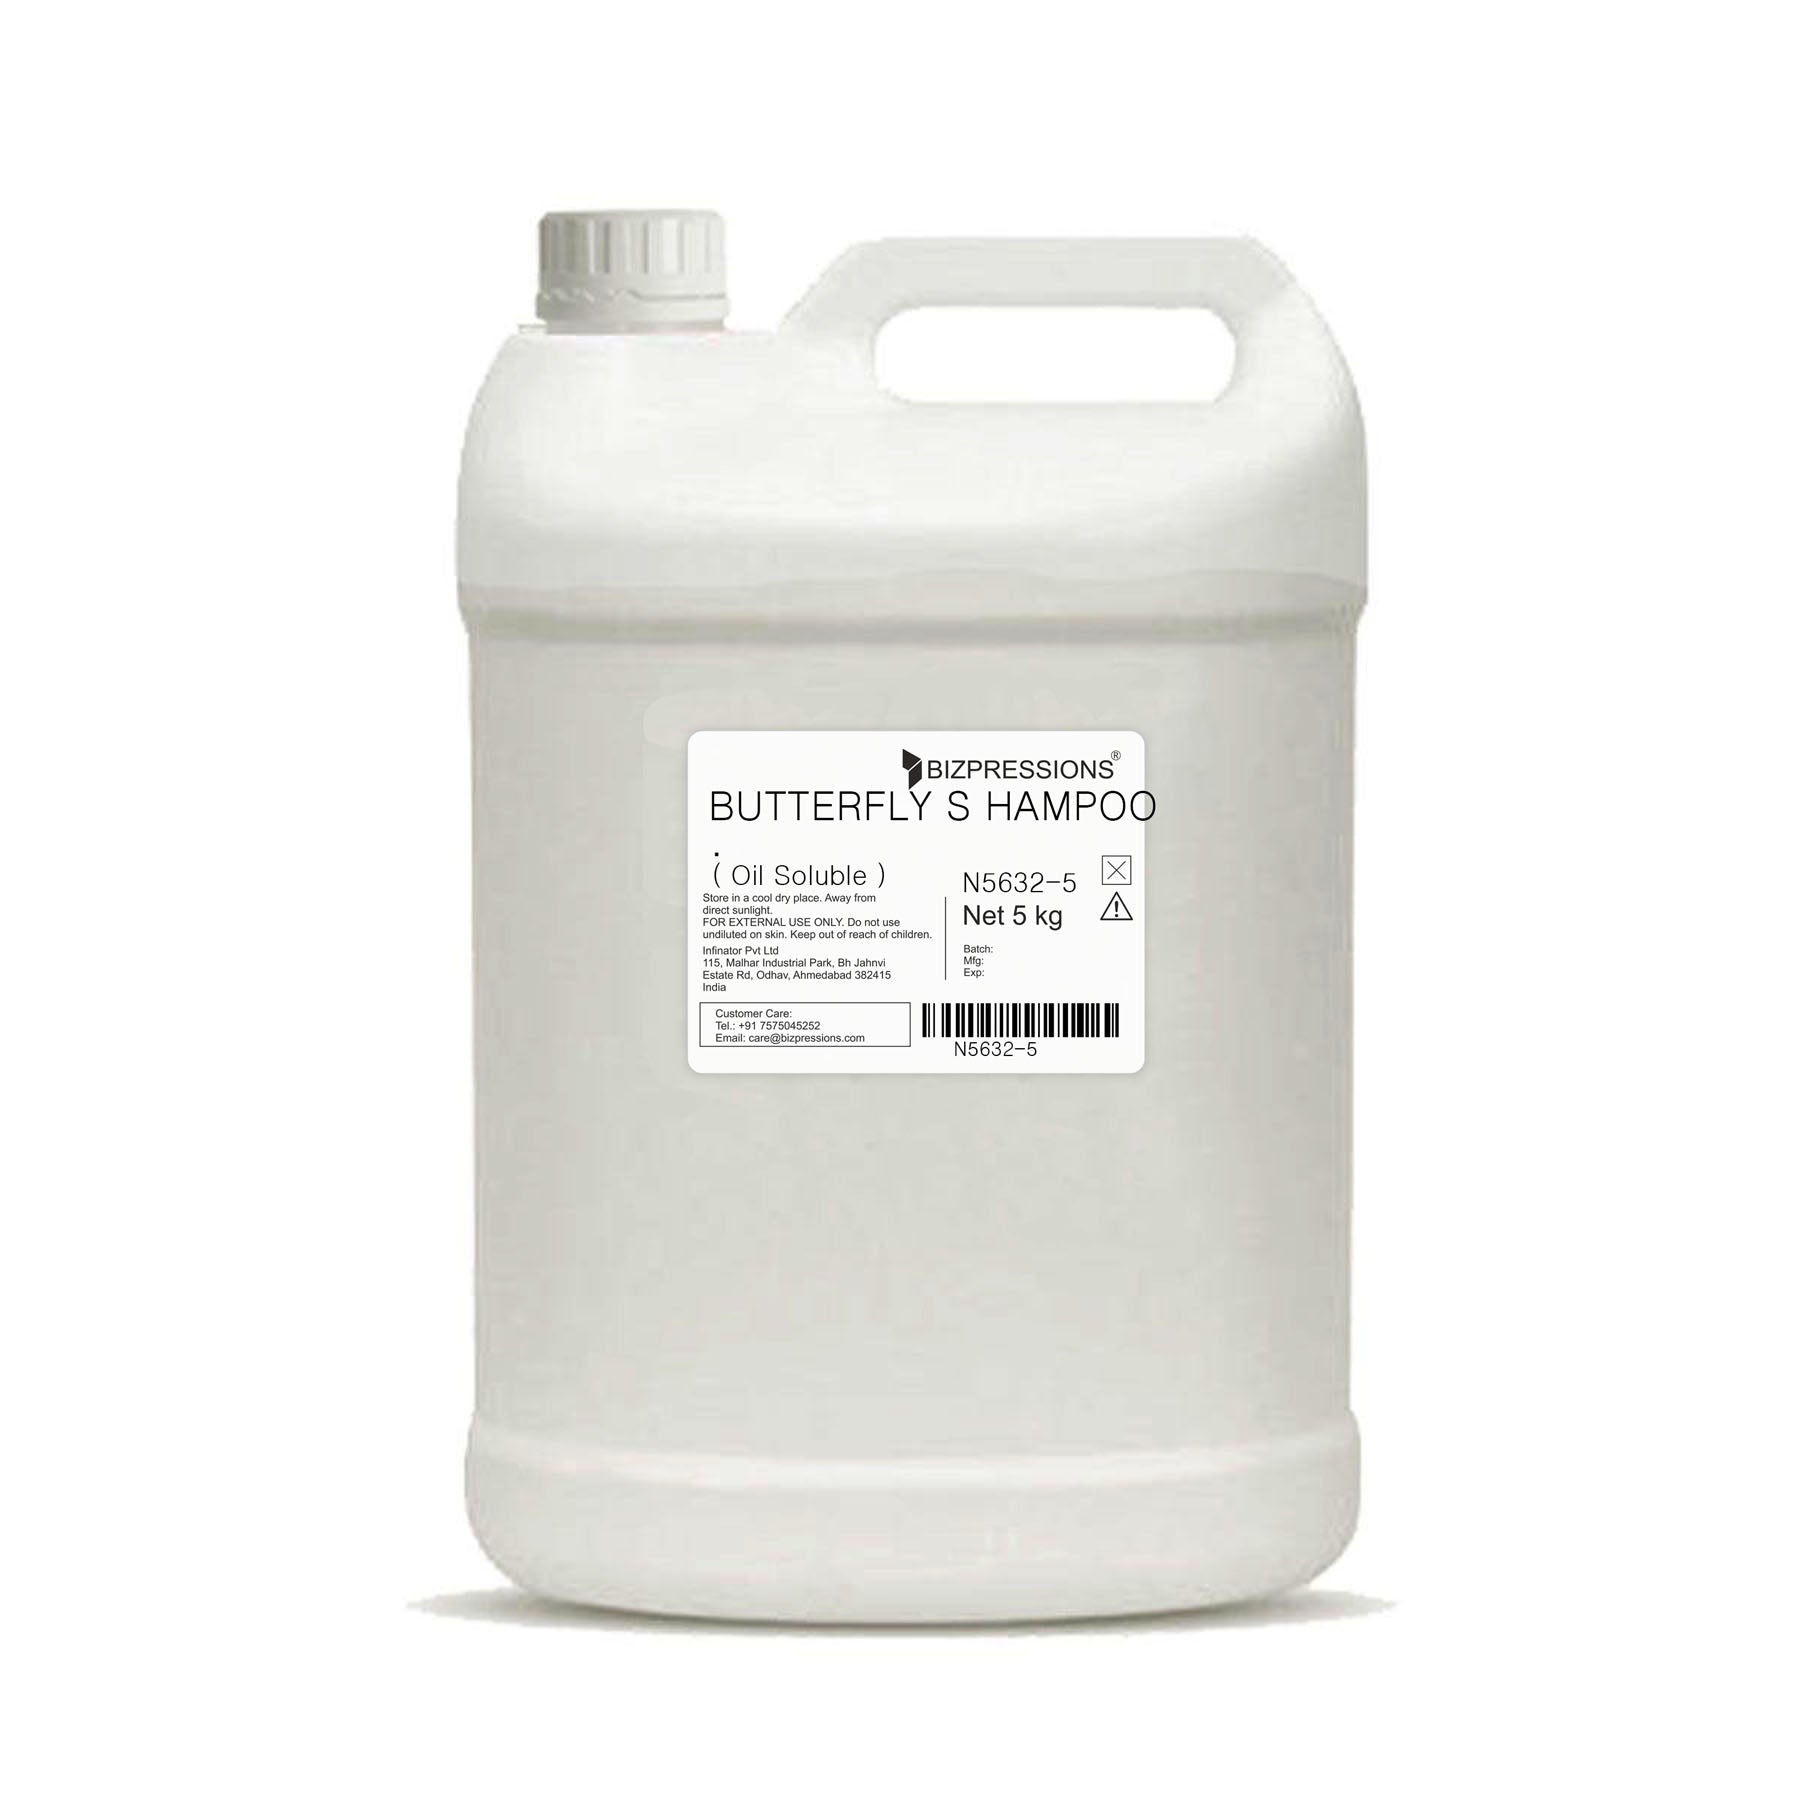 BUTTERFLY SHAMPOO - Fragrance ( Oil Soluble ) - 5 kg